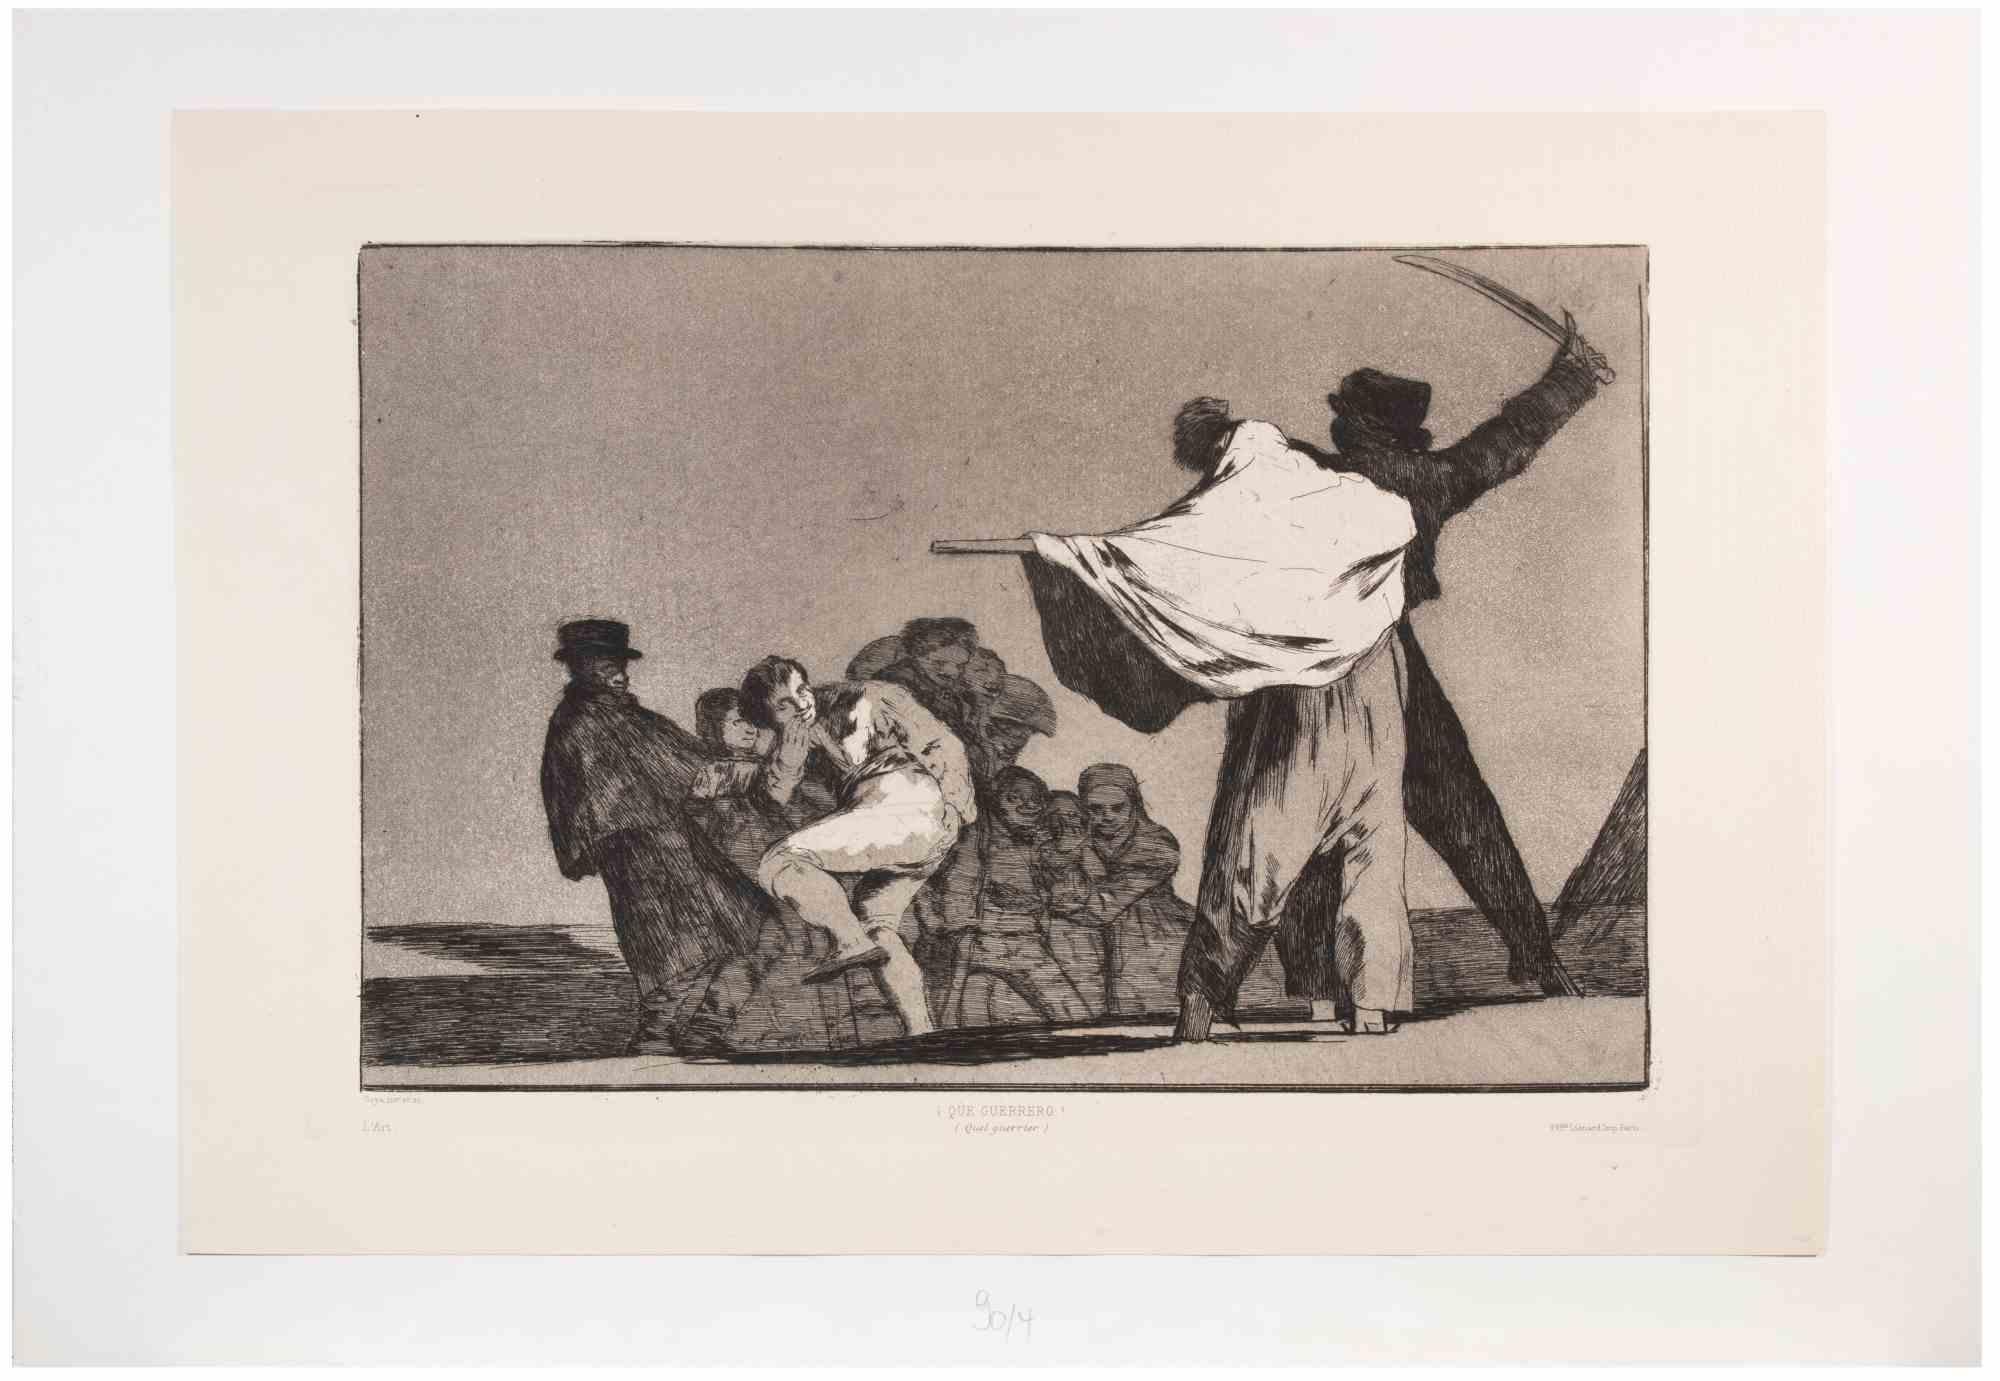 What kind of art did Francisco Goya do?